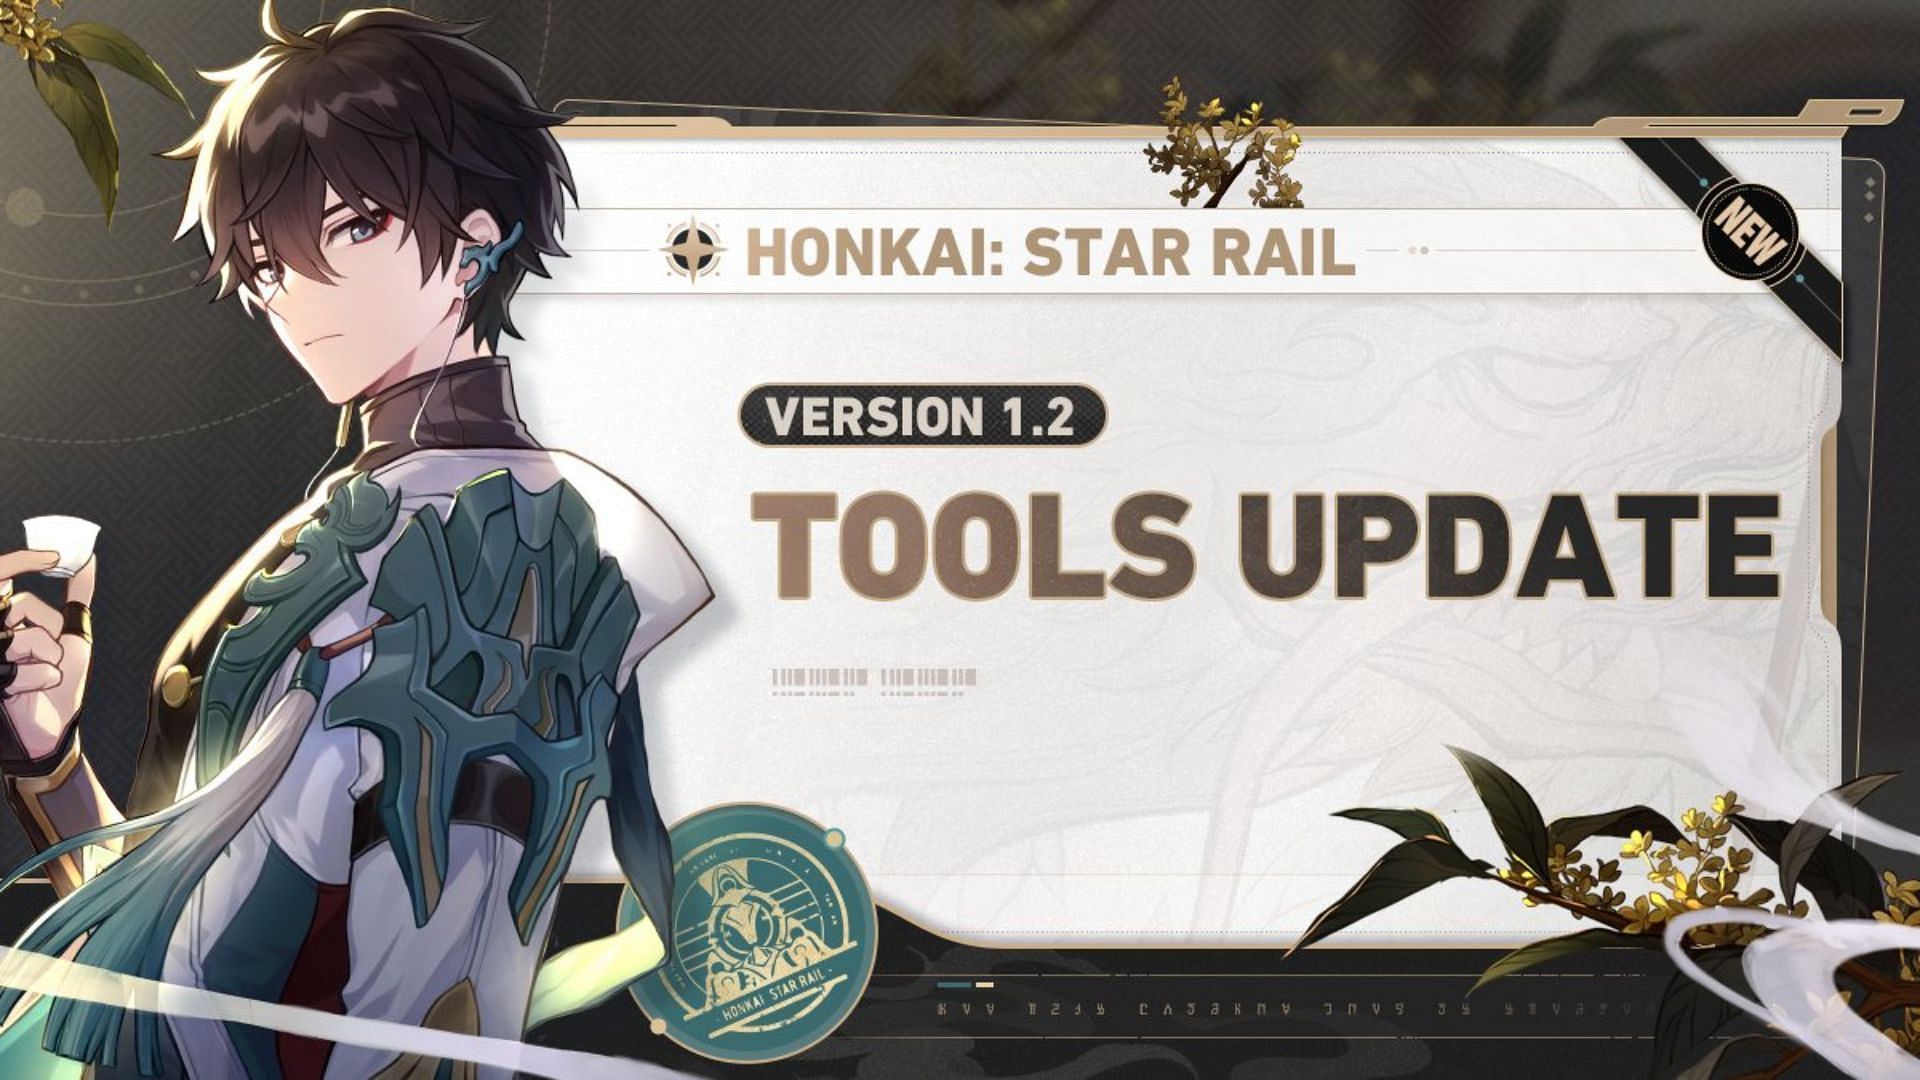 Characters - Honkai: Star Rail - HoYoWiki